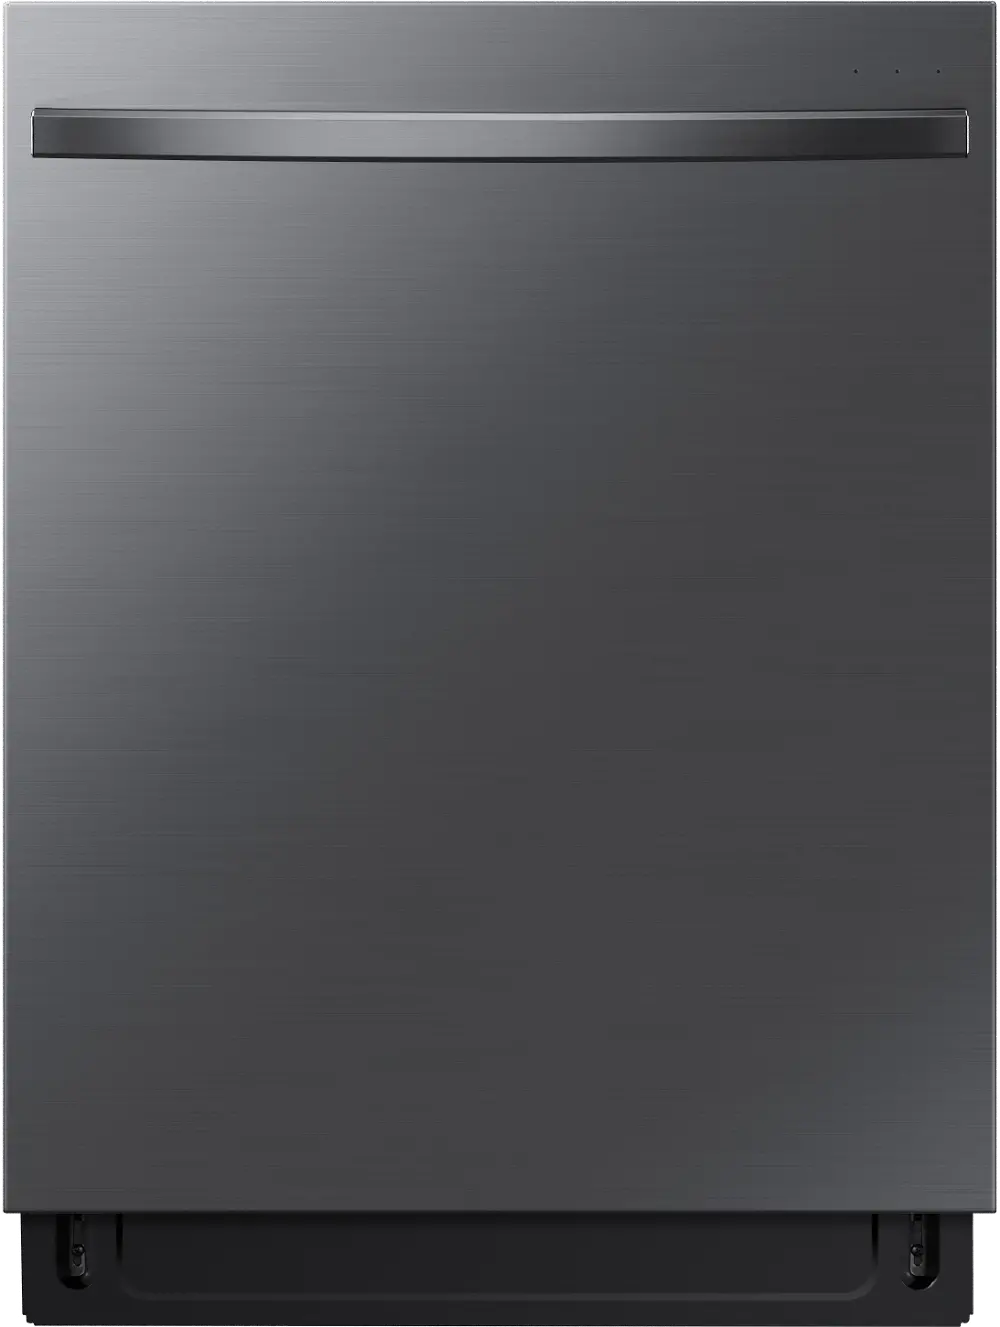 DW80B6061UG Samsung Top Control Dishwasher - Black Stainless Steel-1